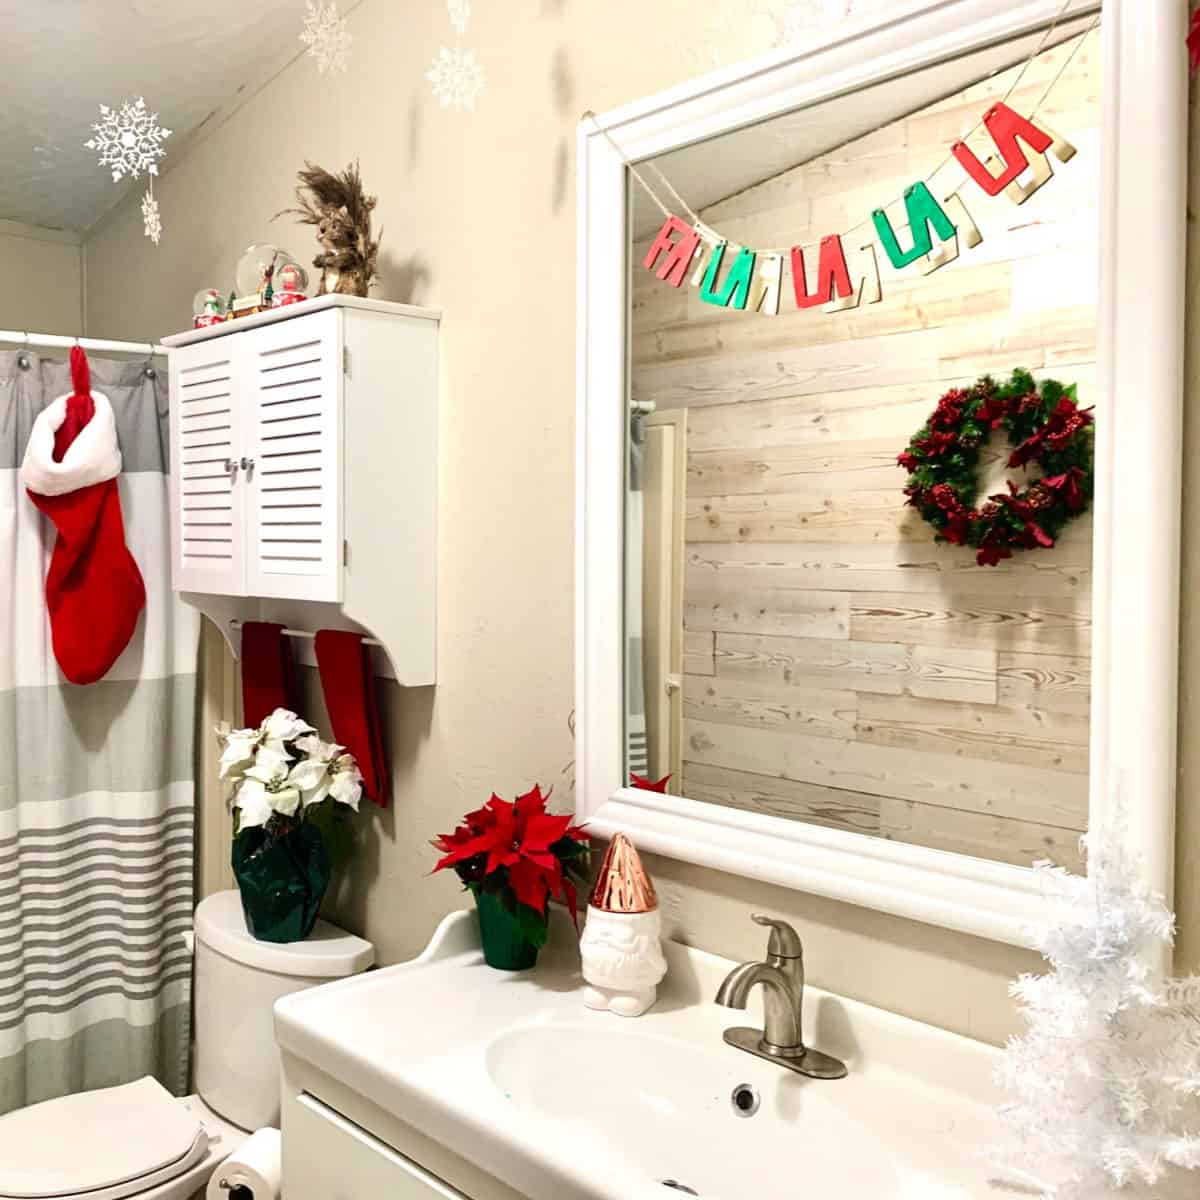 Festive Delight Transforming Your Bathroom with Christmas Decor